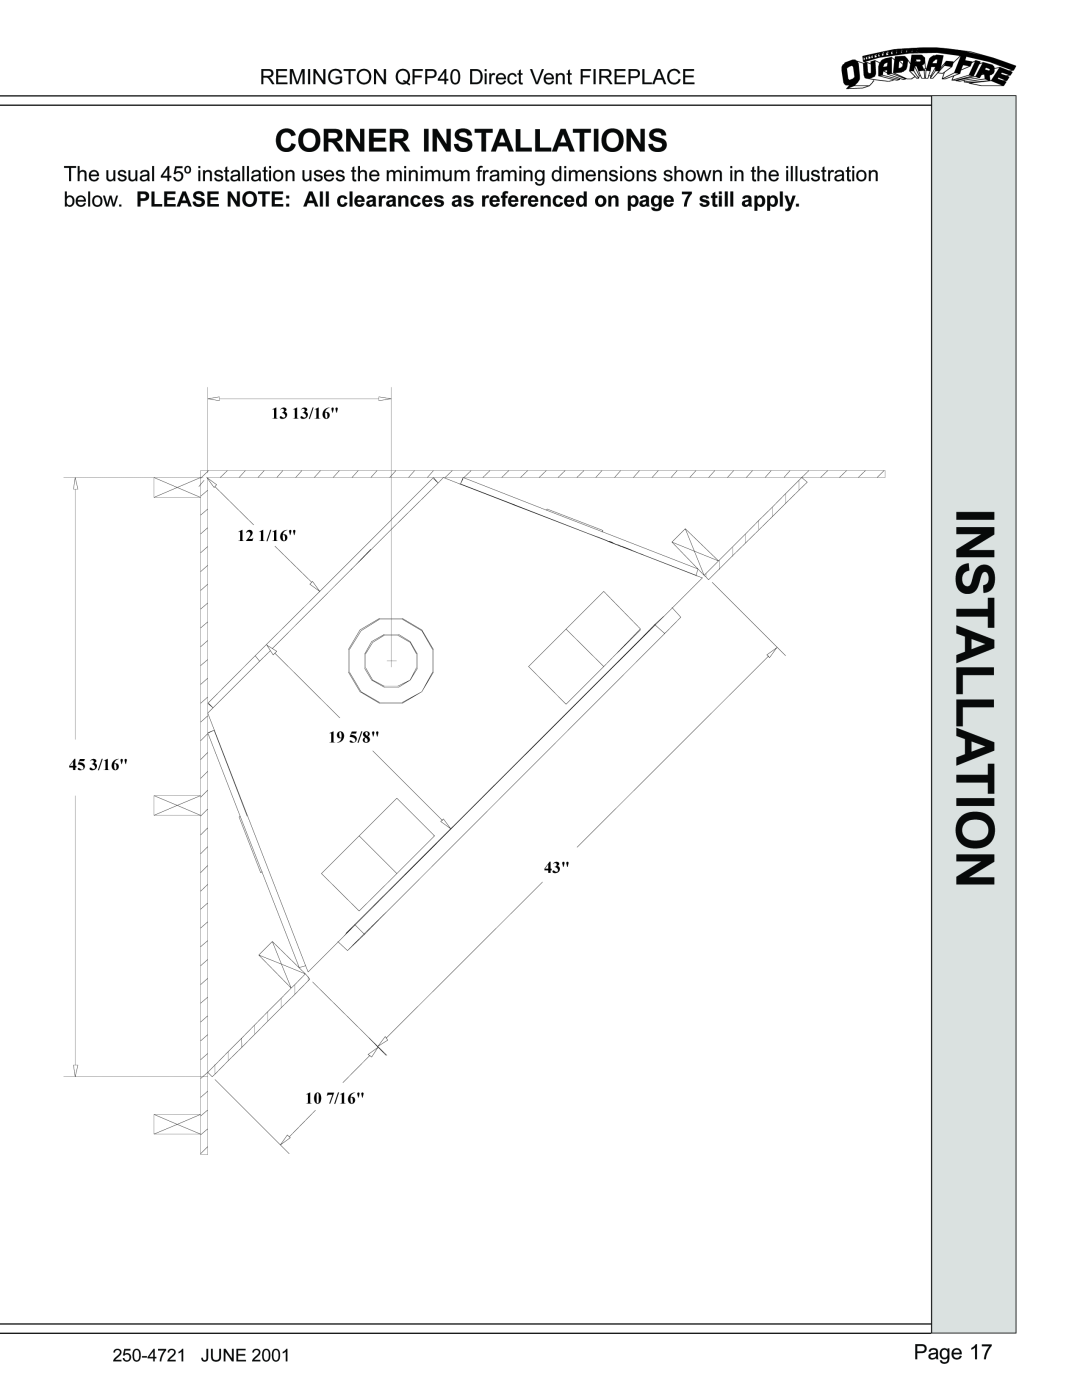 Remington manual Corner Installations, REMINGTON QFP40 Direct Vent FIREPLACE, Page 